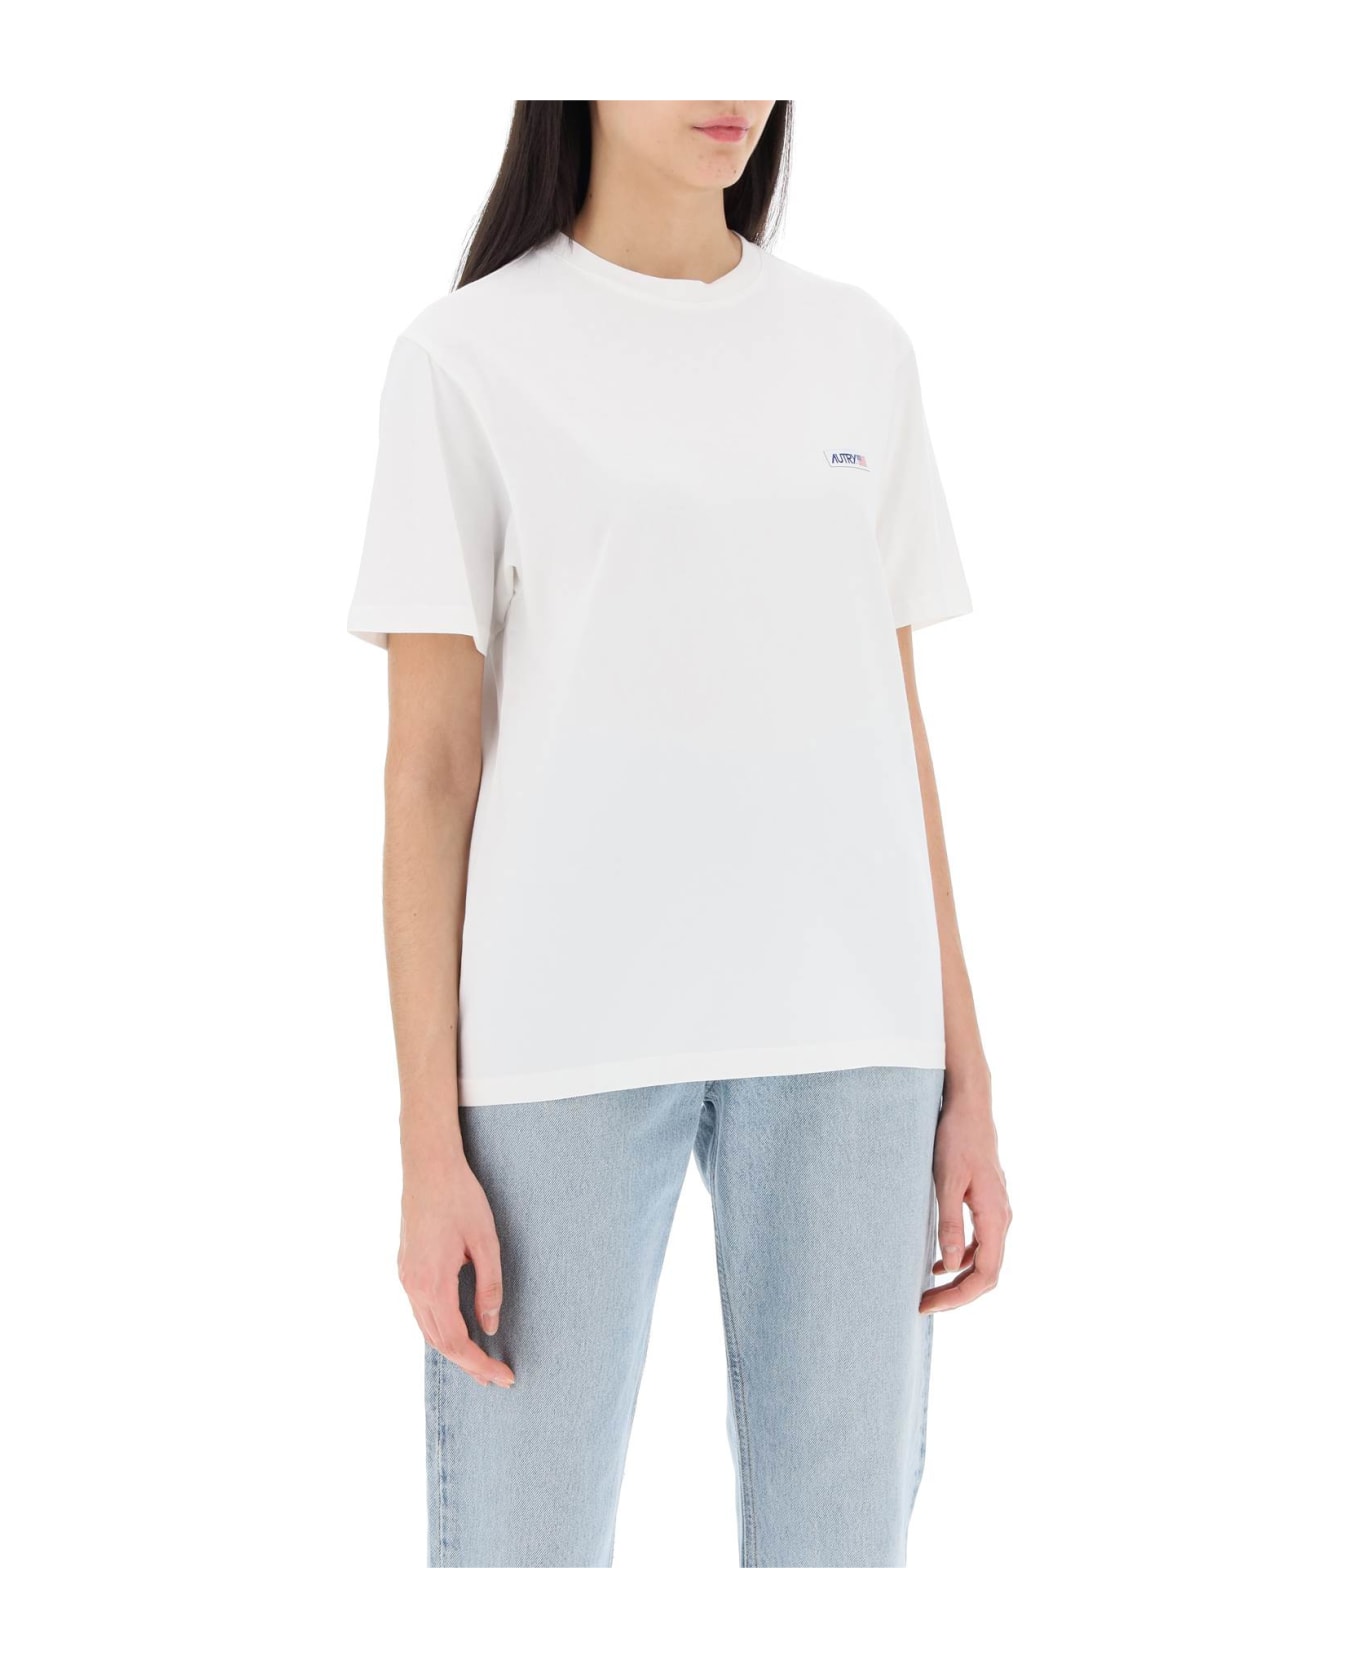 Autry Icon T-shirt - White Tシャツ